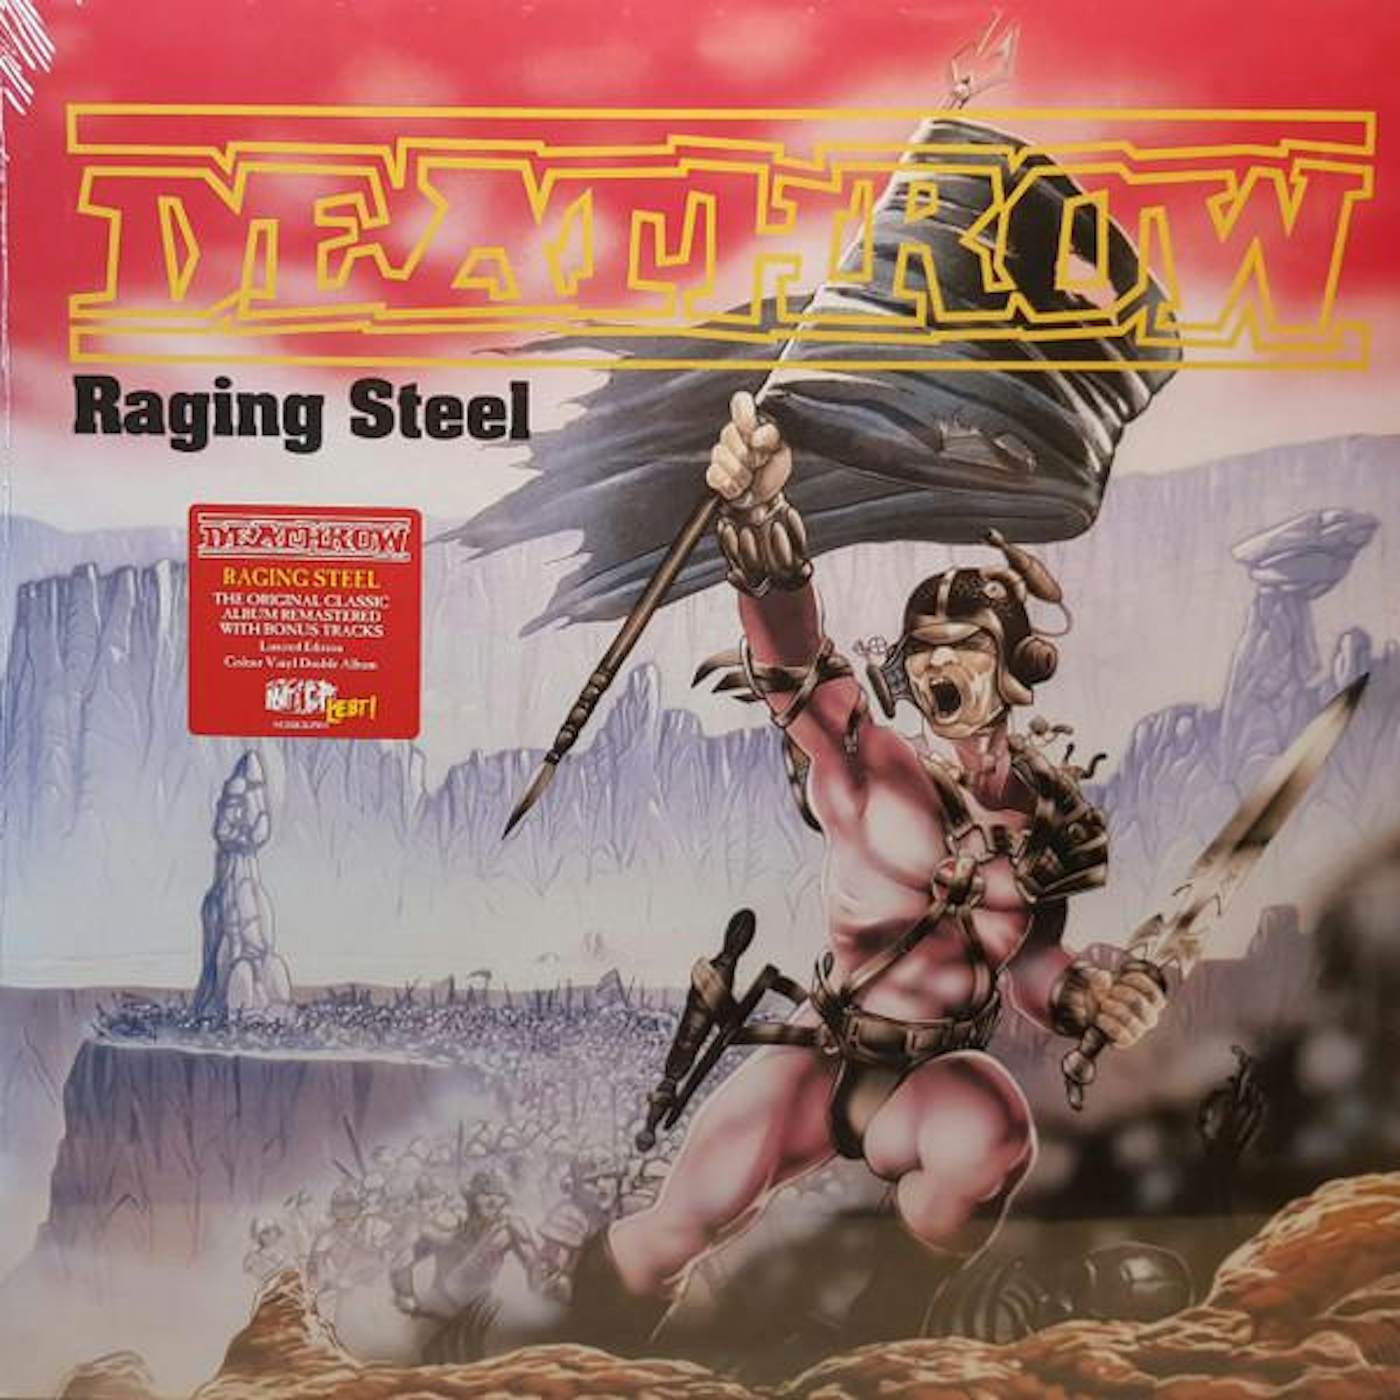 Deathrow RAGING STEEL Vinyl Record